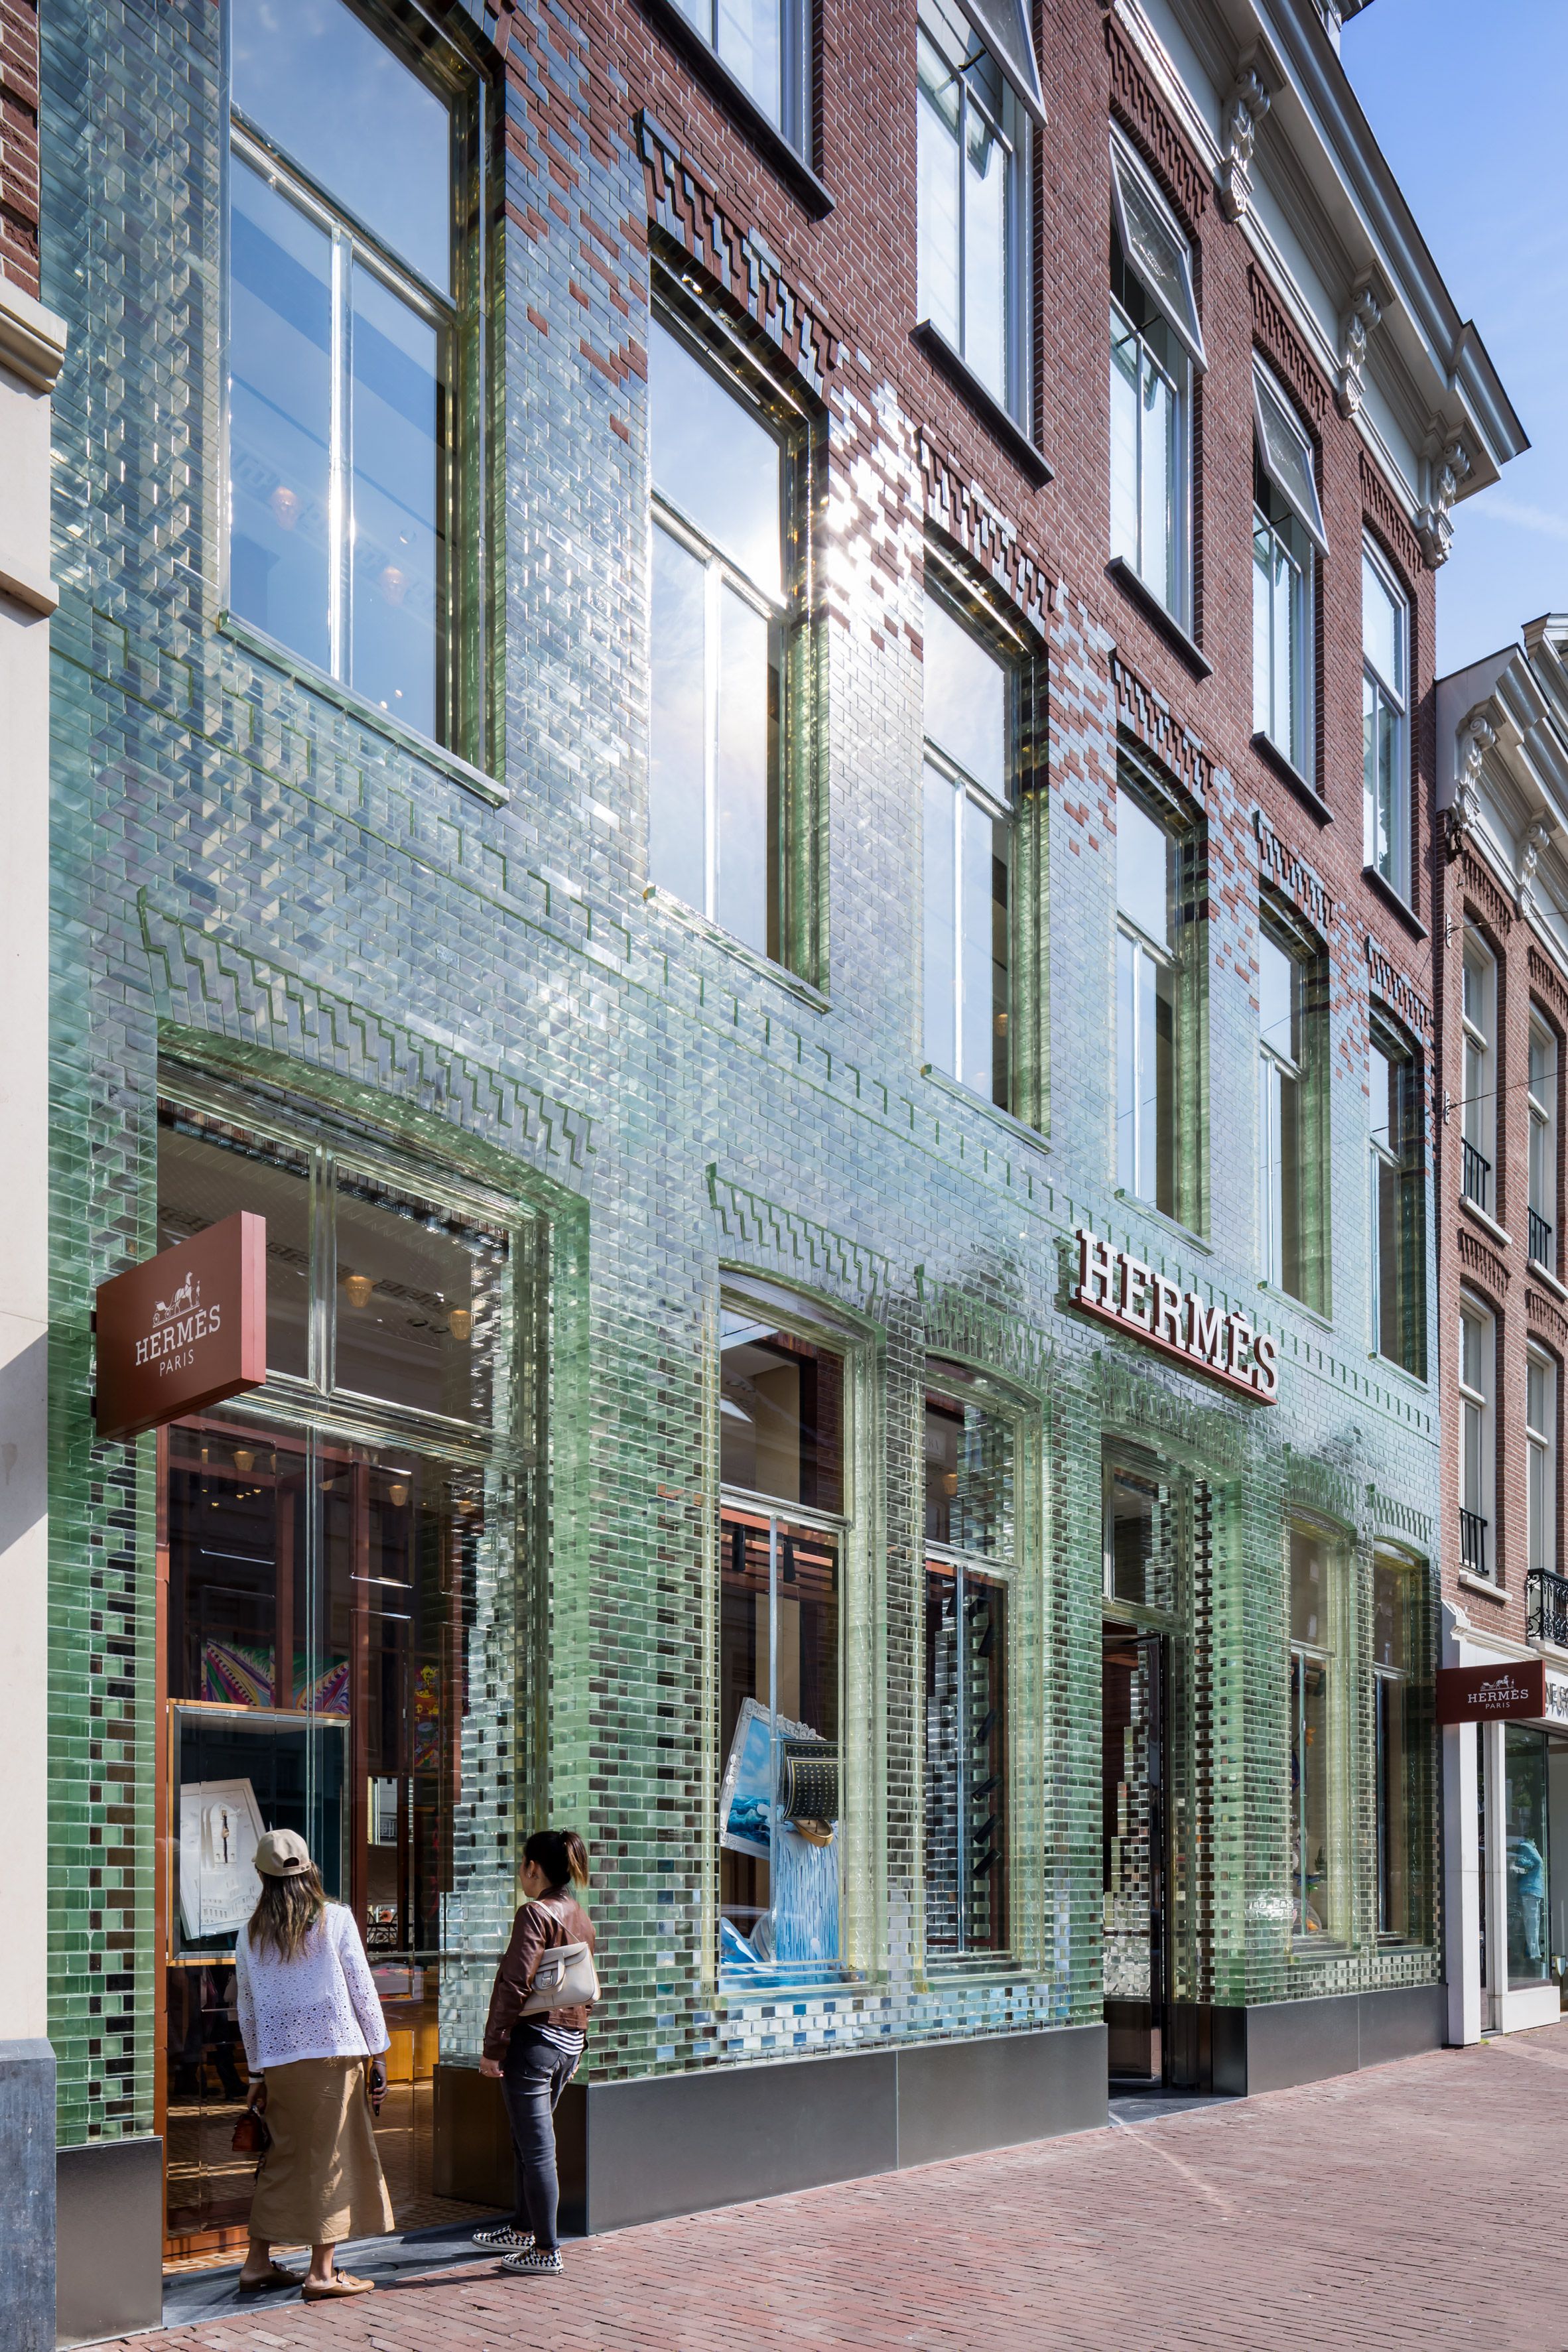 NEW HERMÈS TRANSPARENT BOUTIQUE IN AMSTERDAM BY MVRDV - Artchitectours